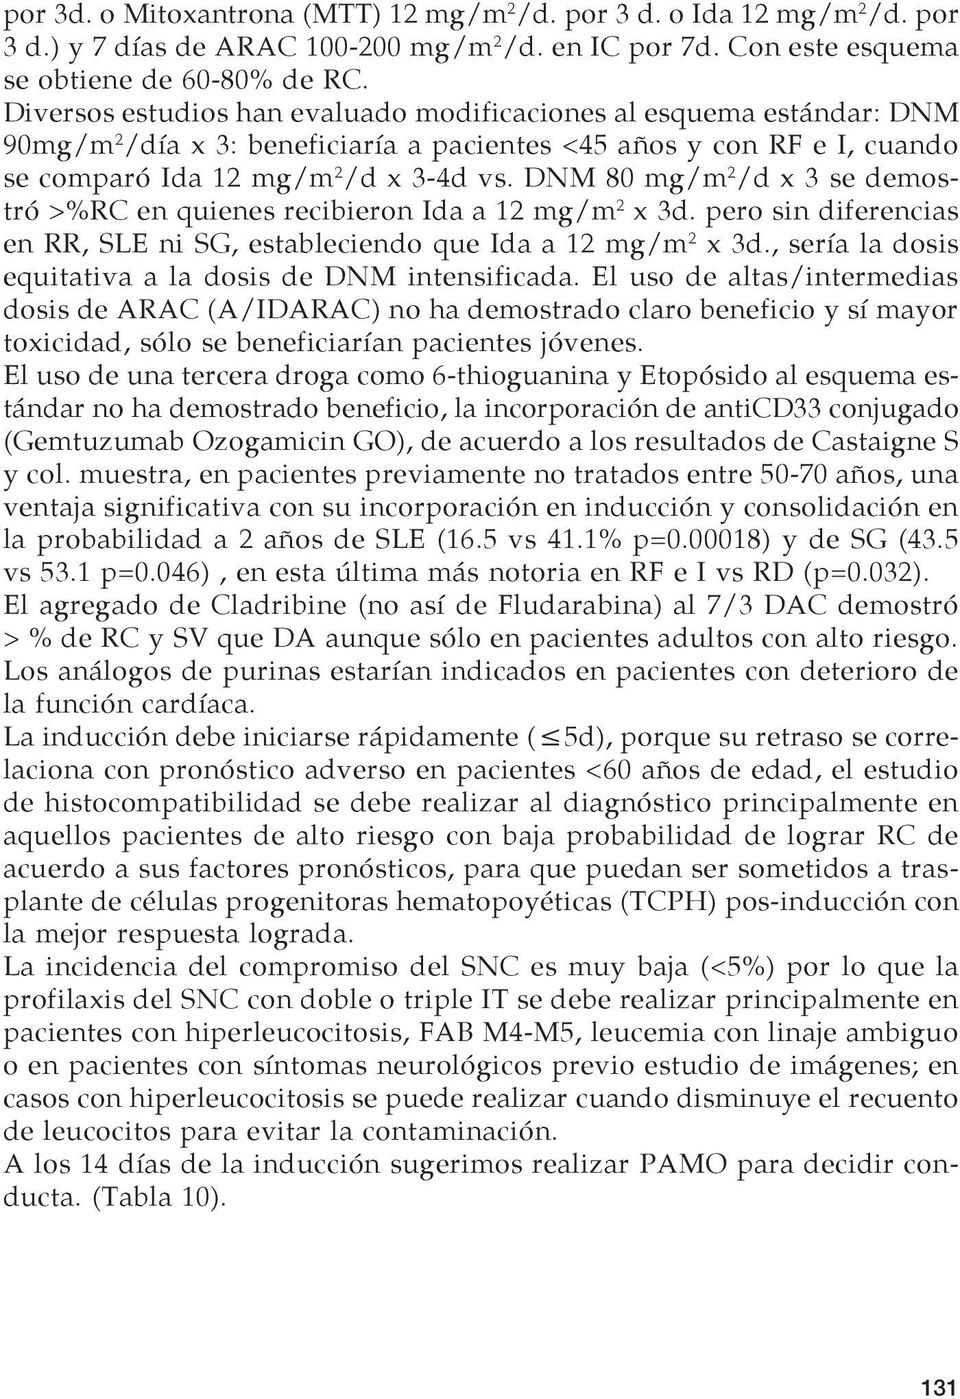 DNM 80 mg/m 2 /d x 3 se demostró >%RC en quienes recibieron Ida a 12 mg/m 2 x 3d. pero sin diferencias en RR, SLE ni SG, estableciendo que Ida a 12 mg/m 2 x 3d.